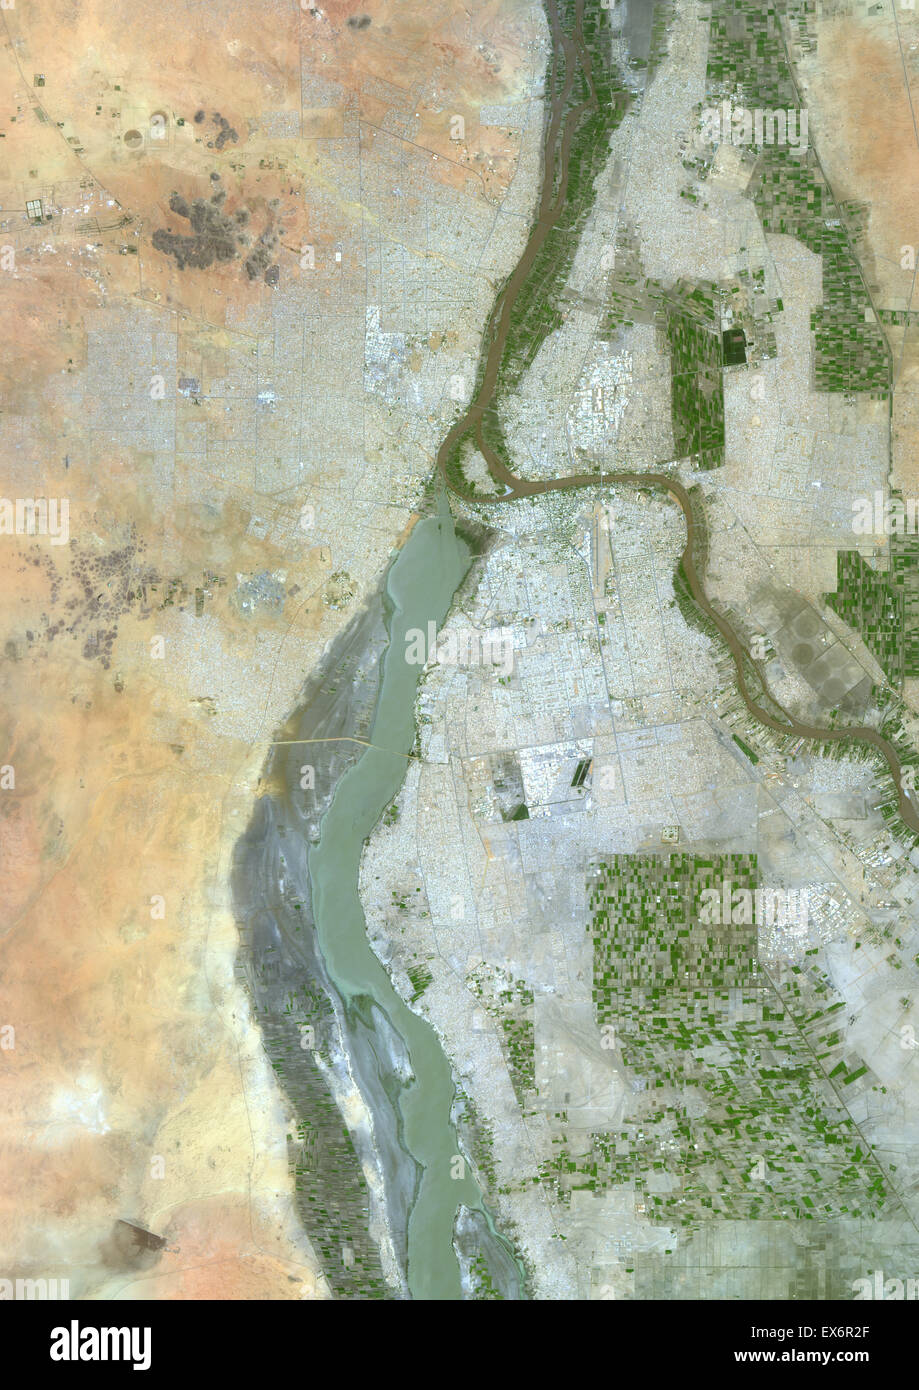 Colour satellite image of Khartoum, Sudan. Image taken on July 16, 2014 with Landsat 8 data. Stock Photo